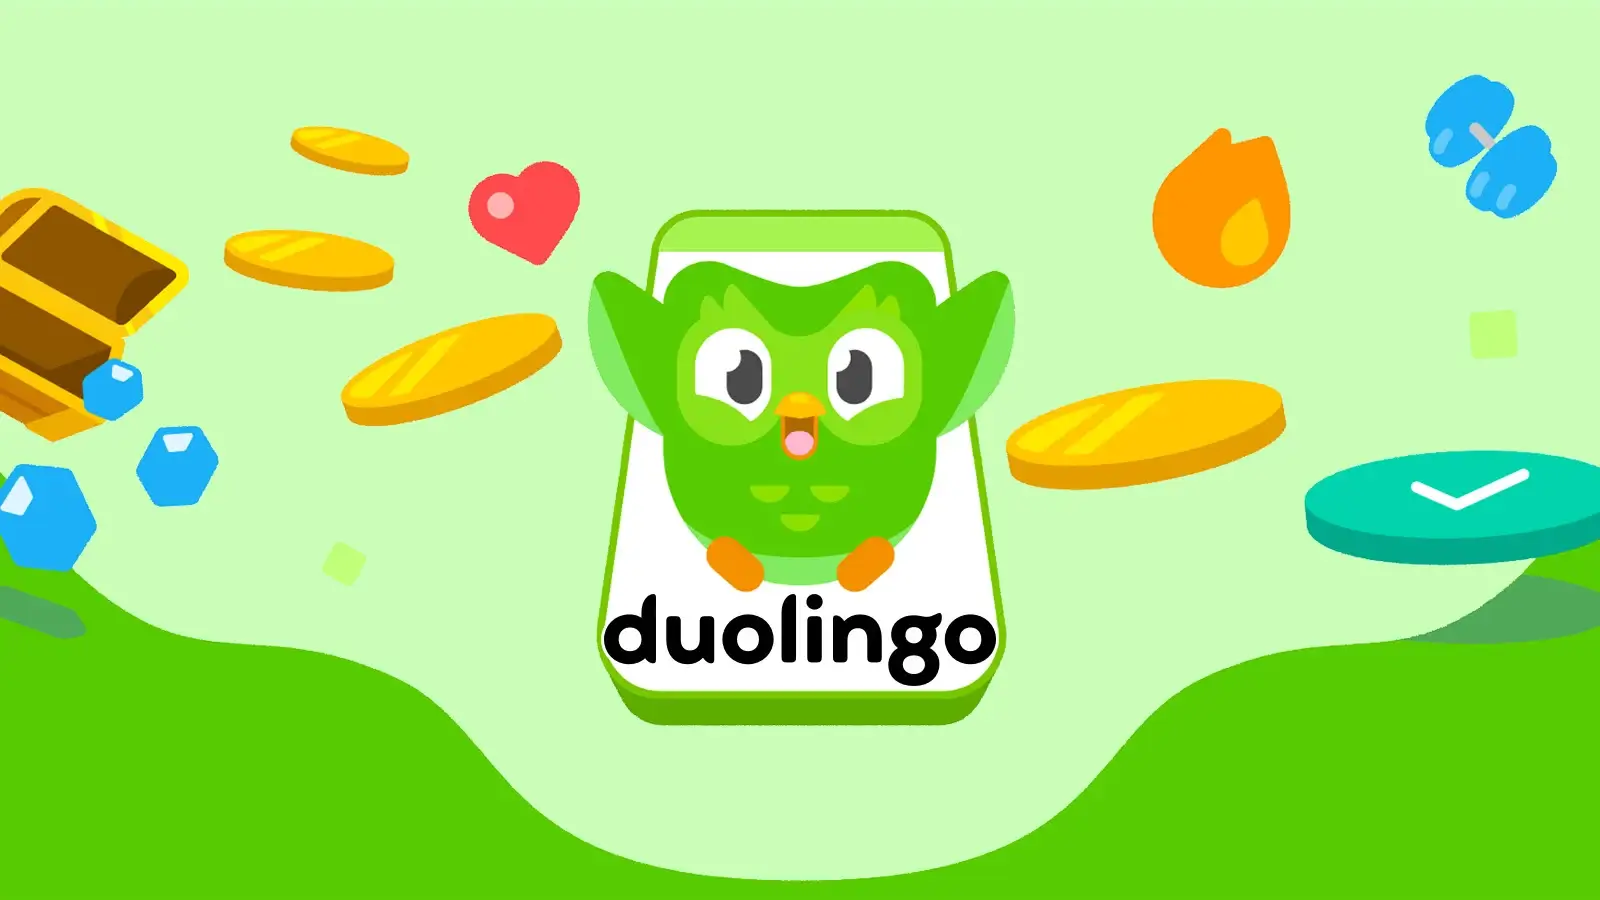 Duolingo users